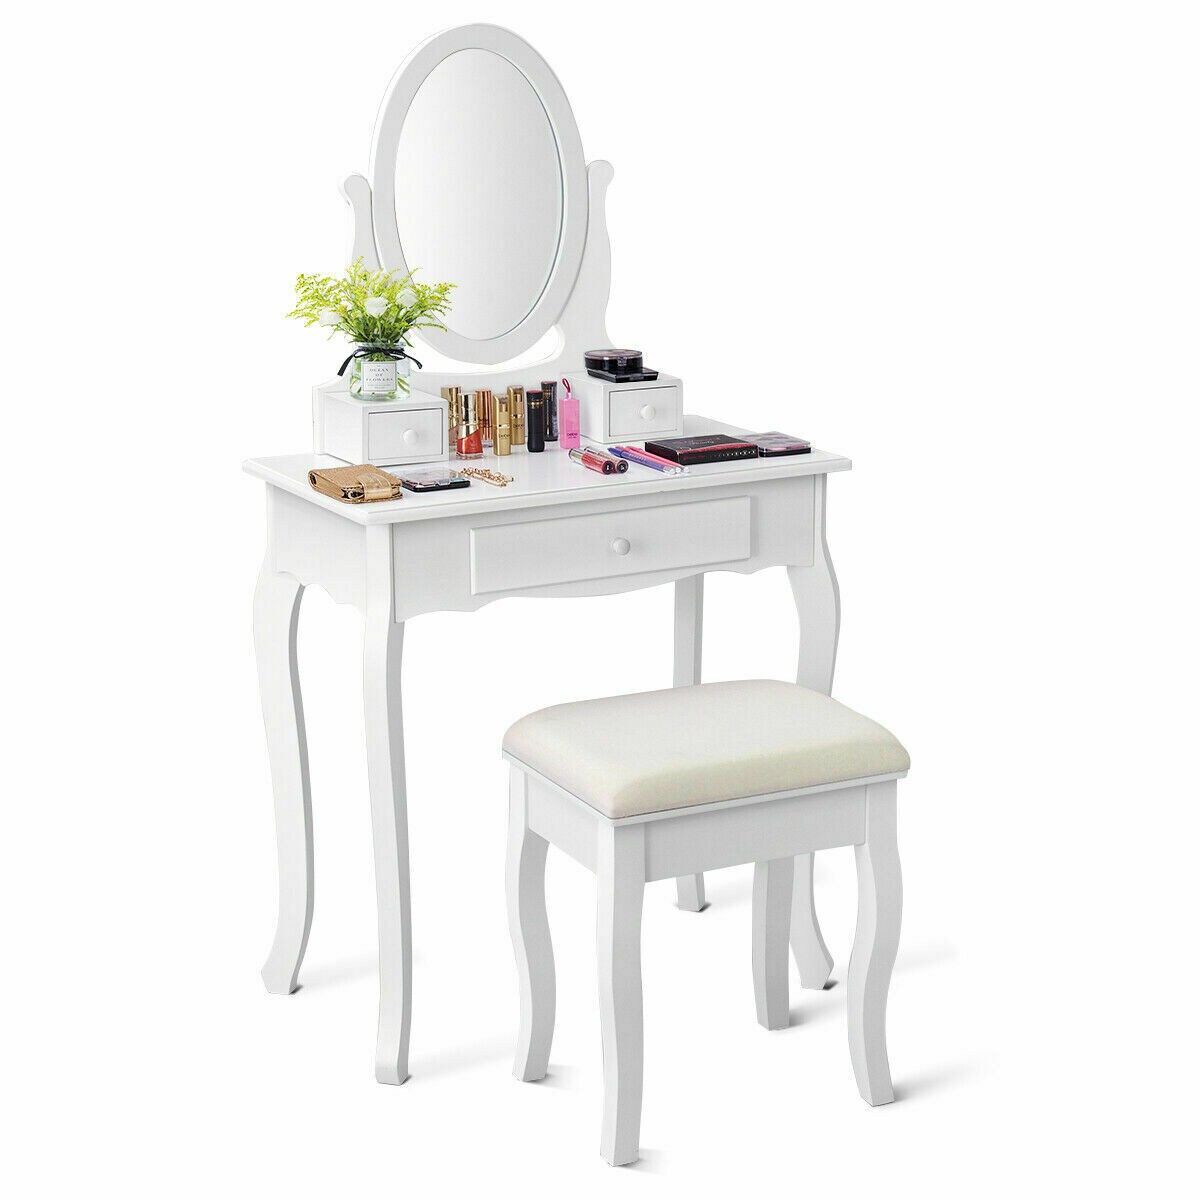 Gymax Makeup Dressing Table Stool Set w/ Drawers Mirror Vanity Set White